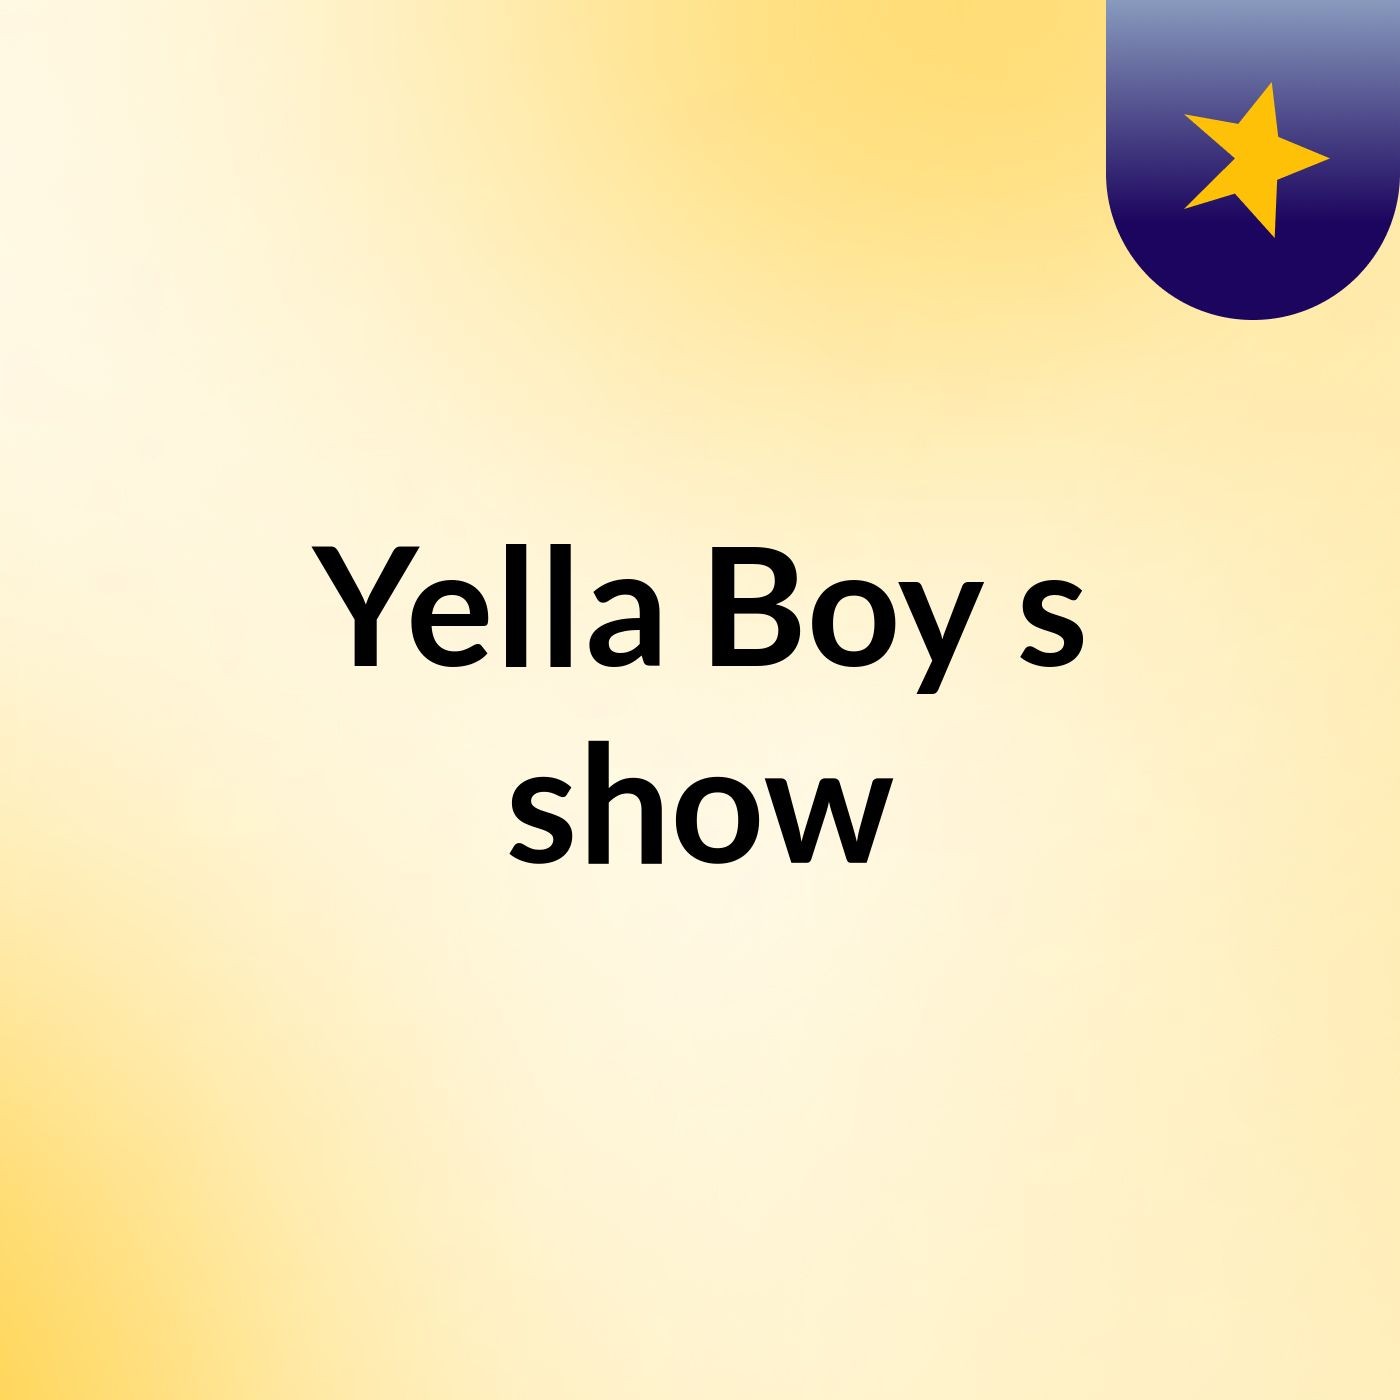 Yella Boy's show